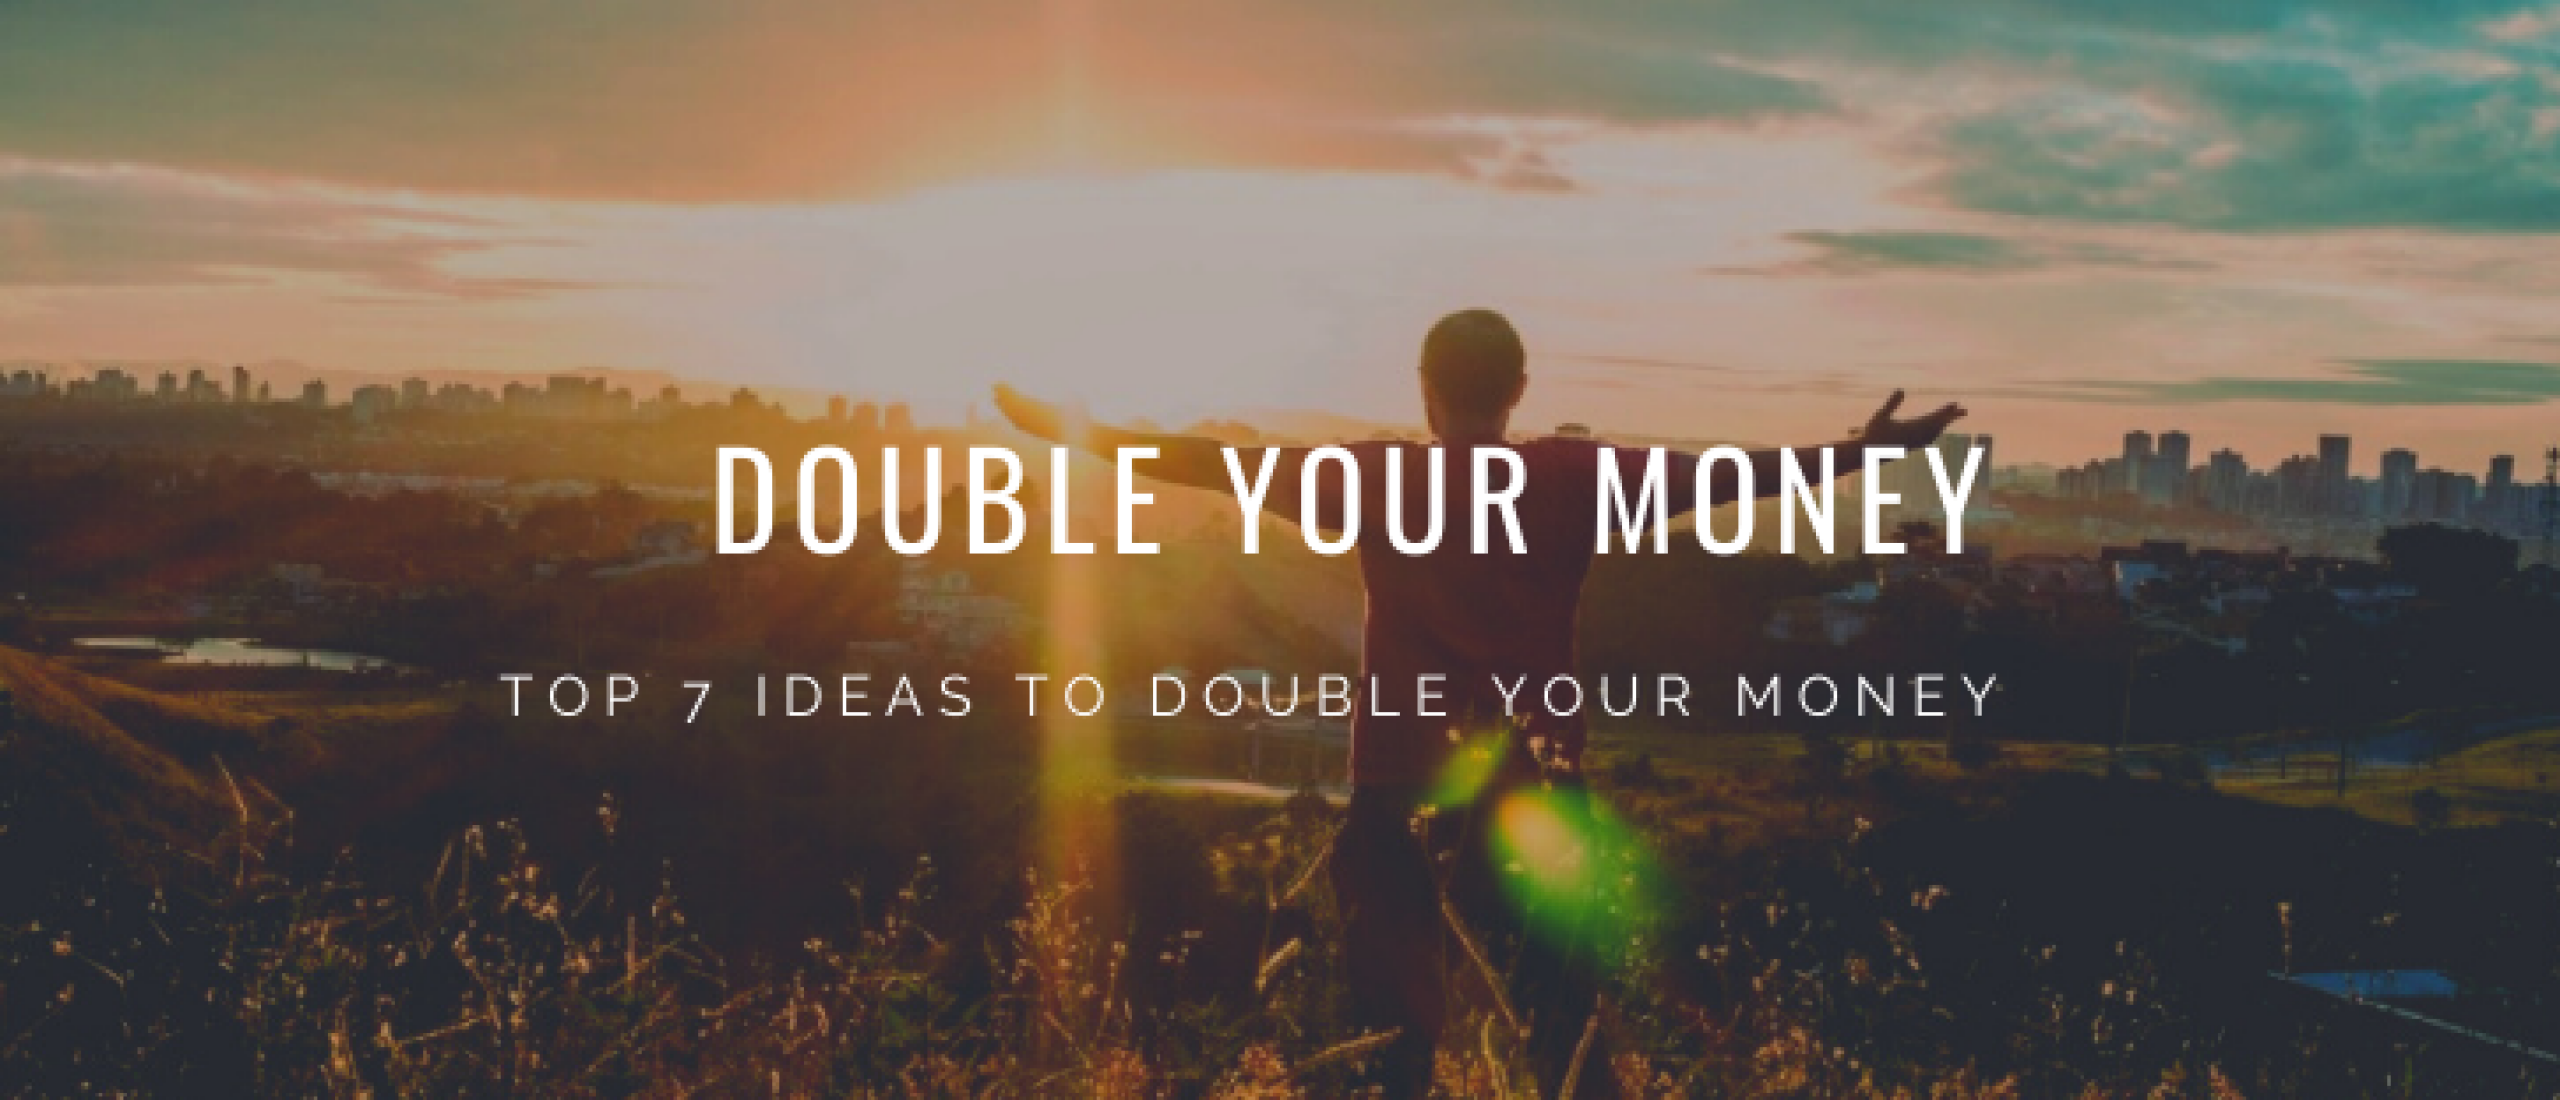 TOP 7 Ideas to Double Your Money | Happy Investors